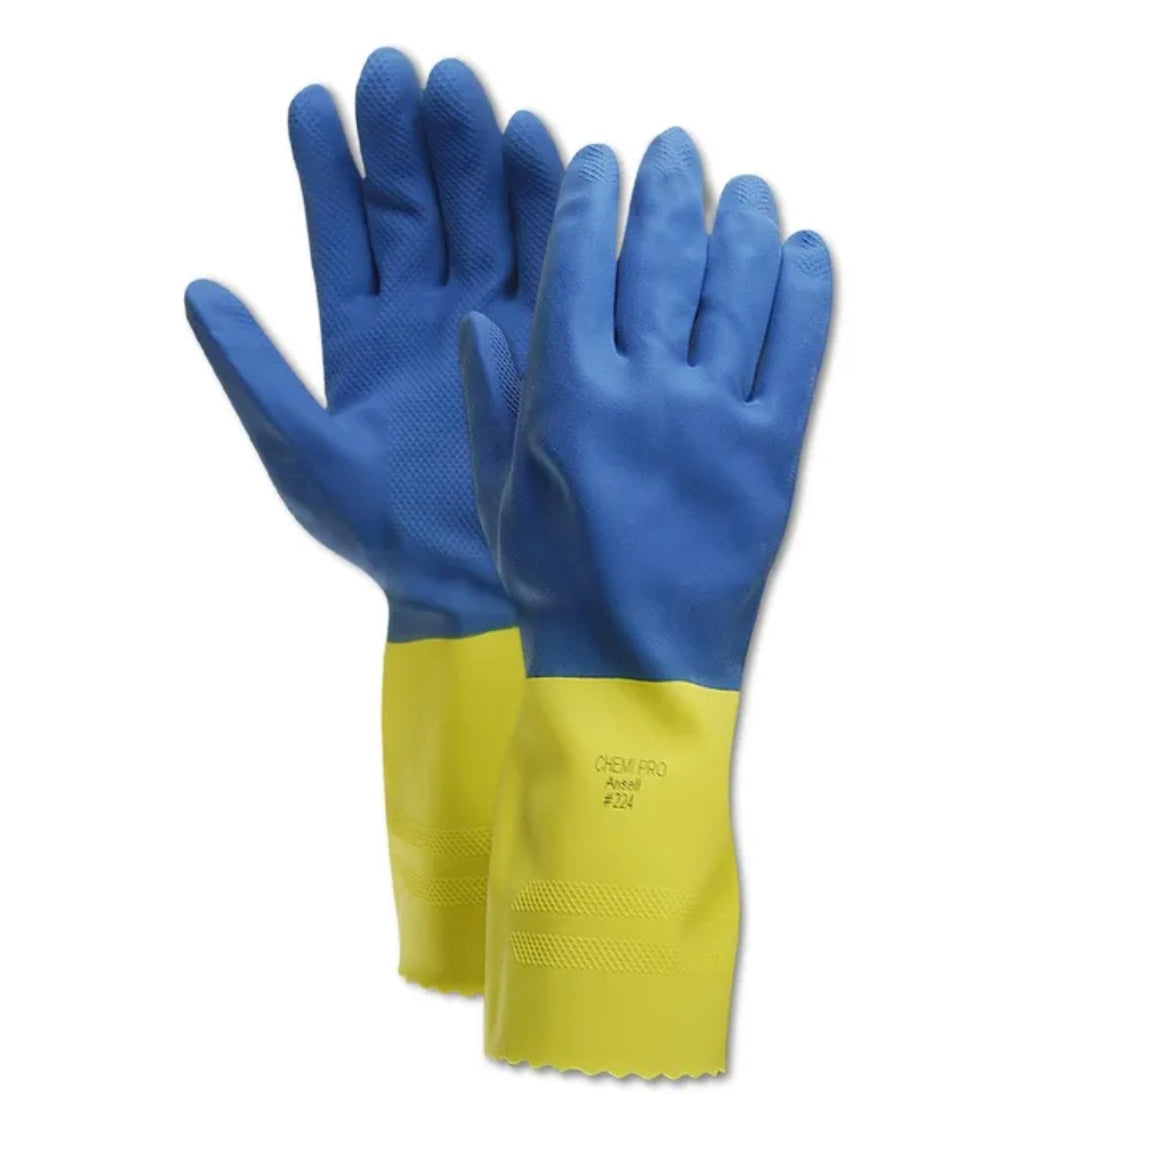 Ansell Chemi-Pro 224 Blue Neoprene/Latex Gloves - Size Small